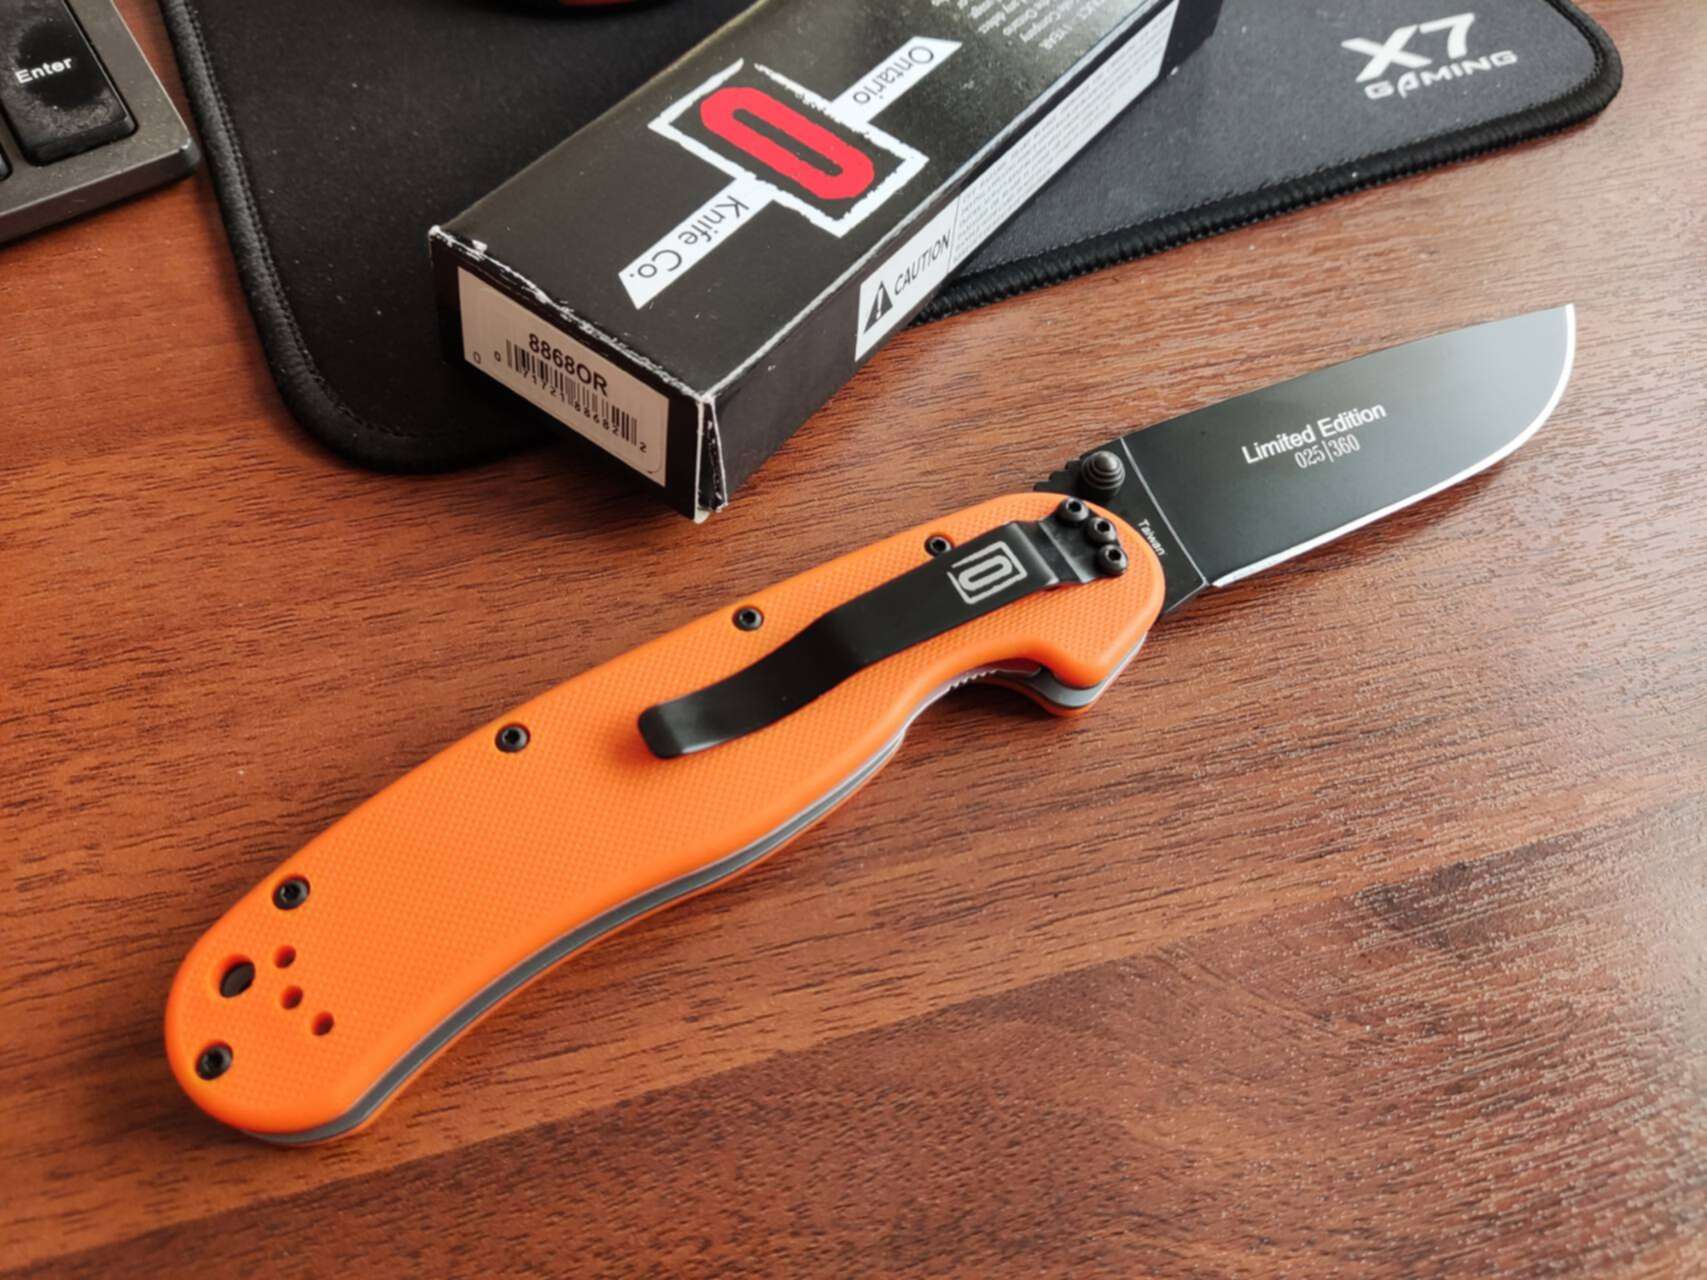 Нож складной Five Pro Титан. DICORIA XF нож складной лимитка 2012. Нож Пономарь фикс лимитка. Нож полочник авторский.